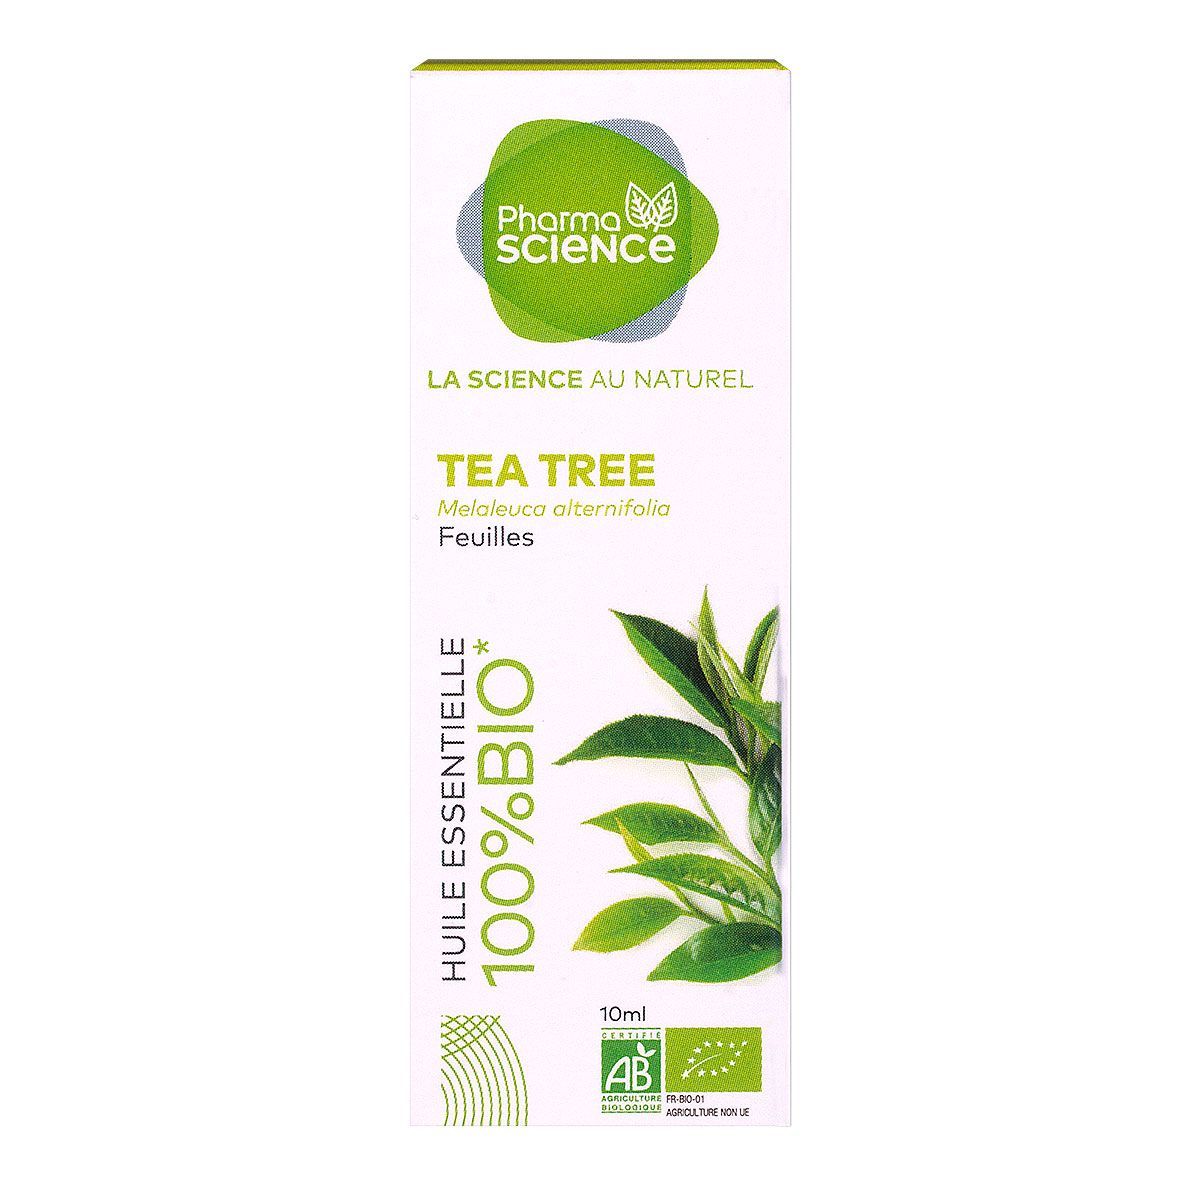 TEA-TREE Huile essentielle bio 10ml